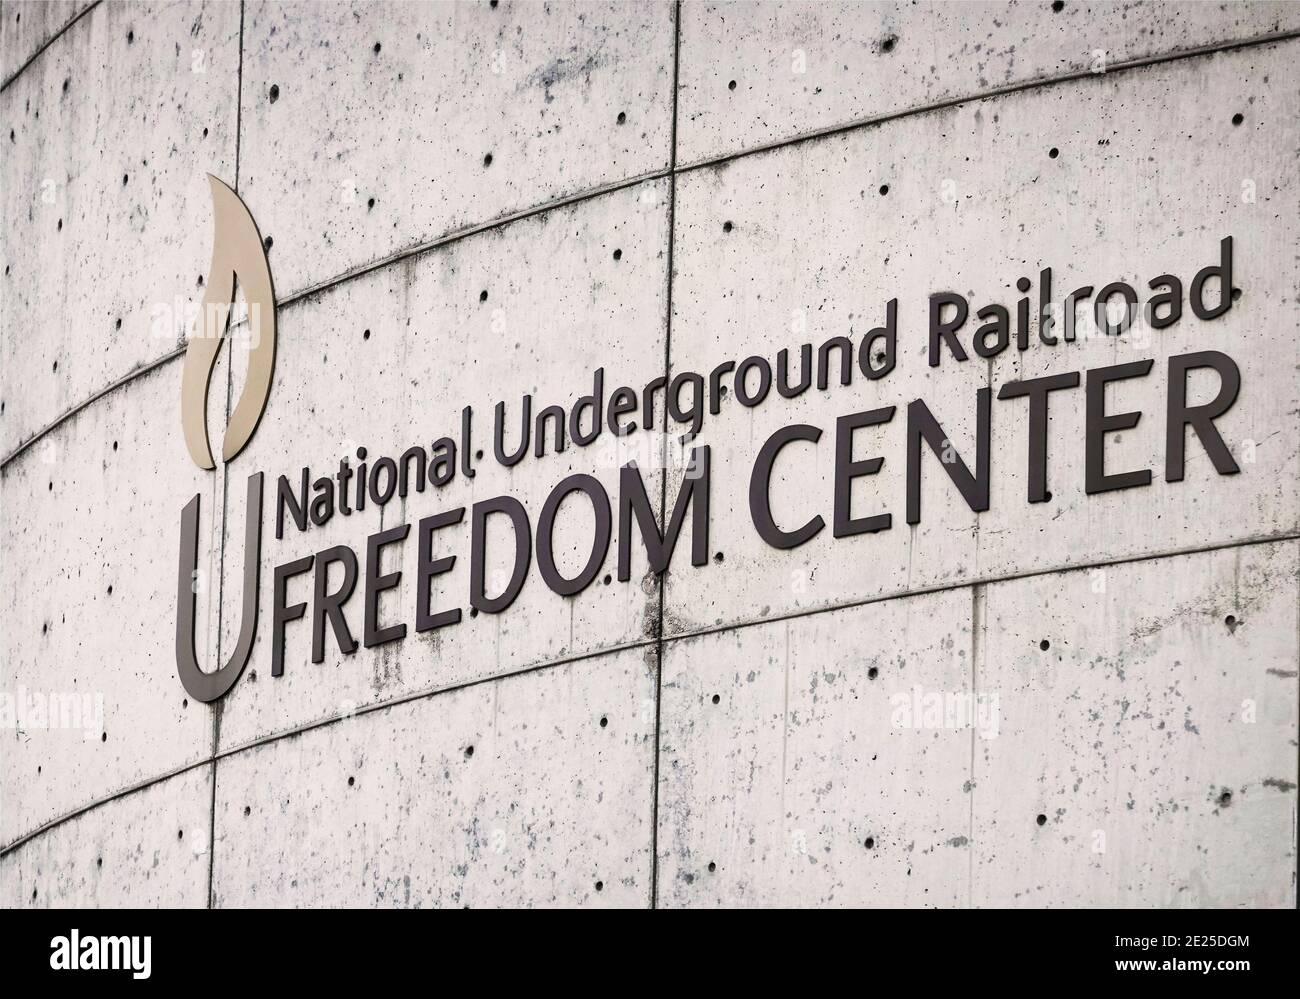 National Underground Railroad Freedom Center Cincinnati OH Stock Photo